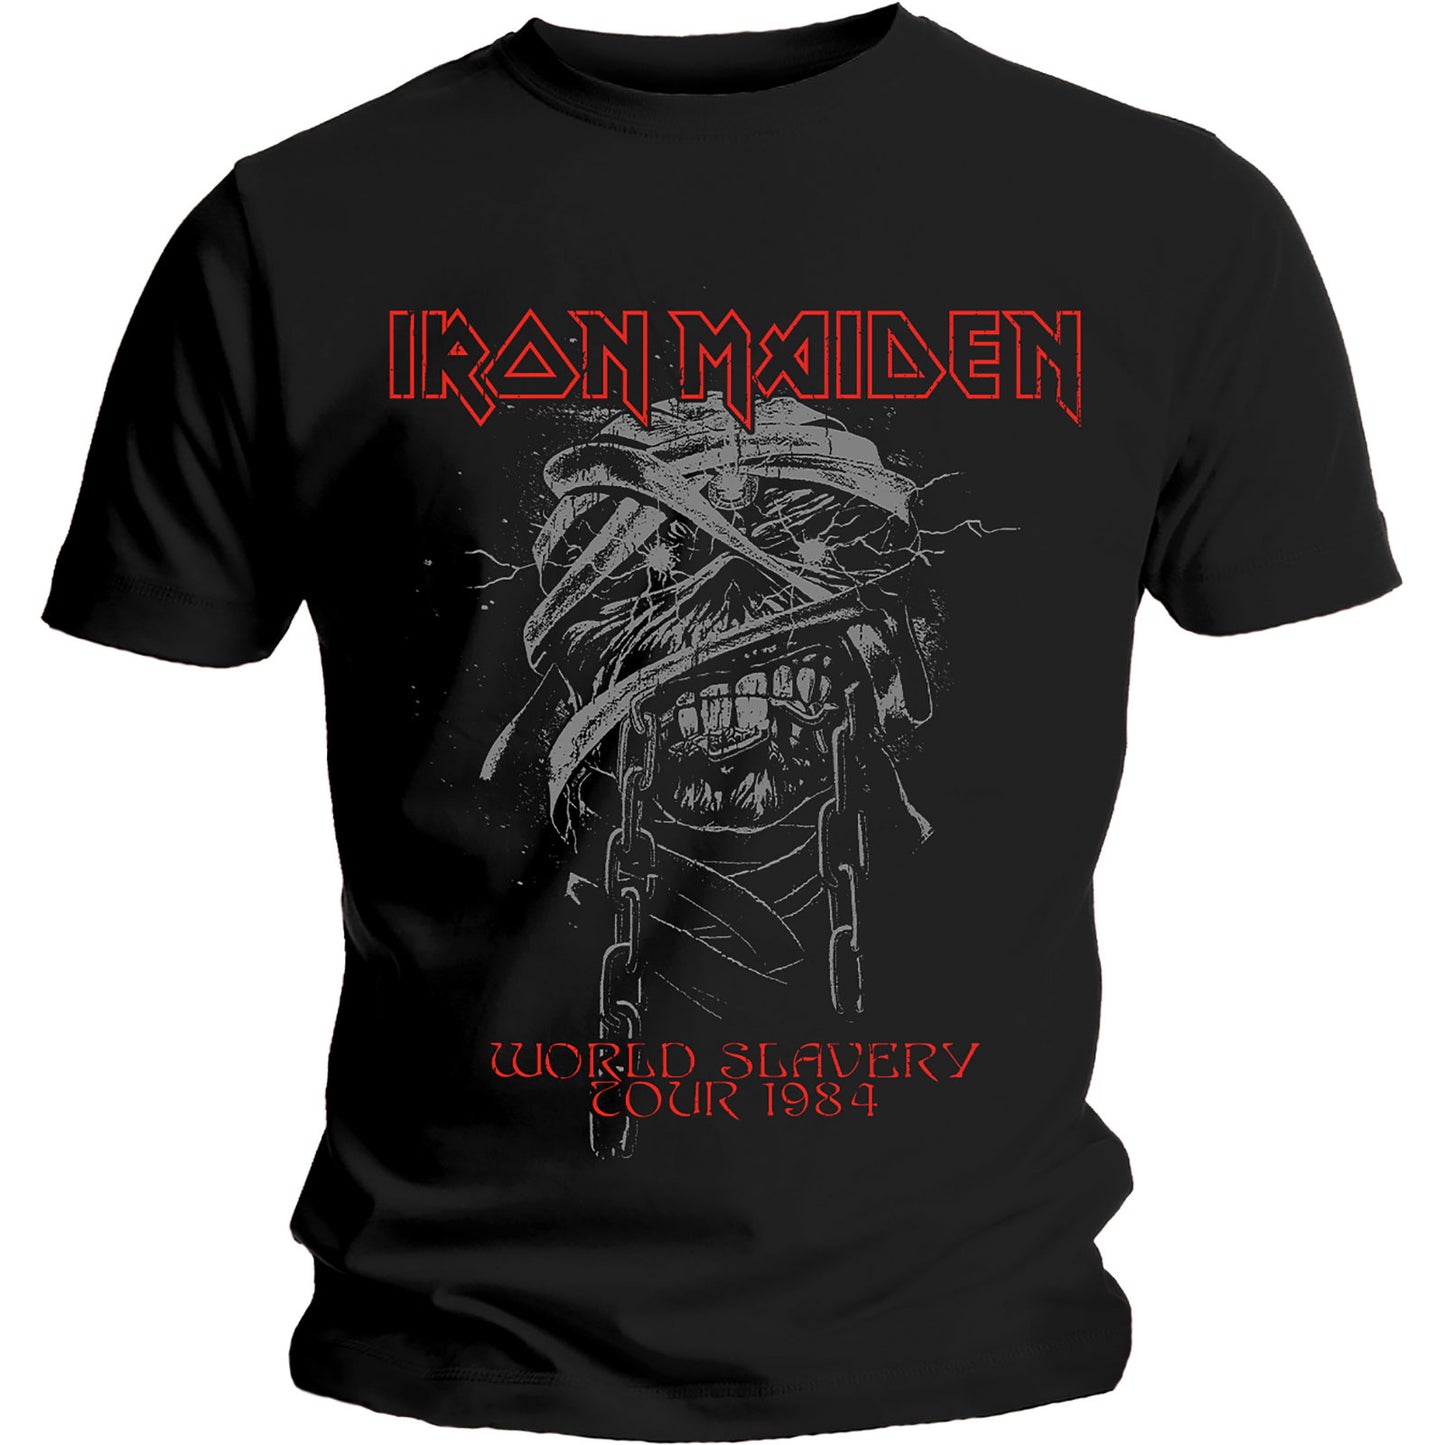 Iron Maiden T-Shirt: World Slavery 1984 Tour